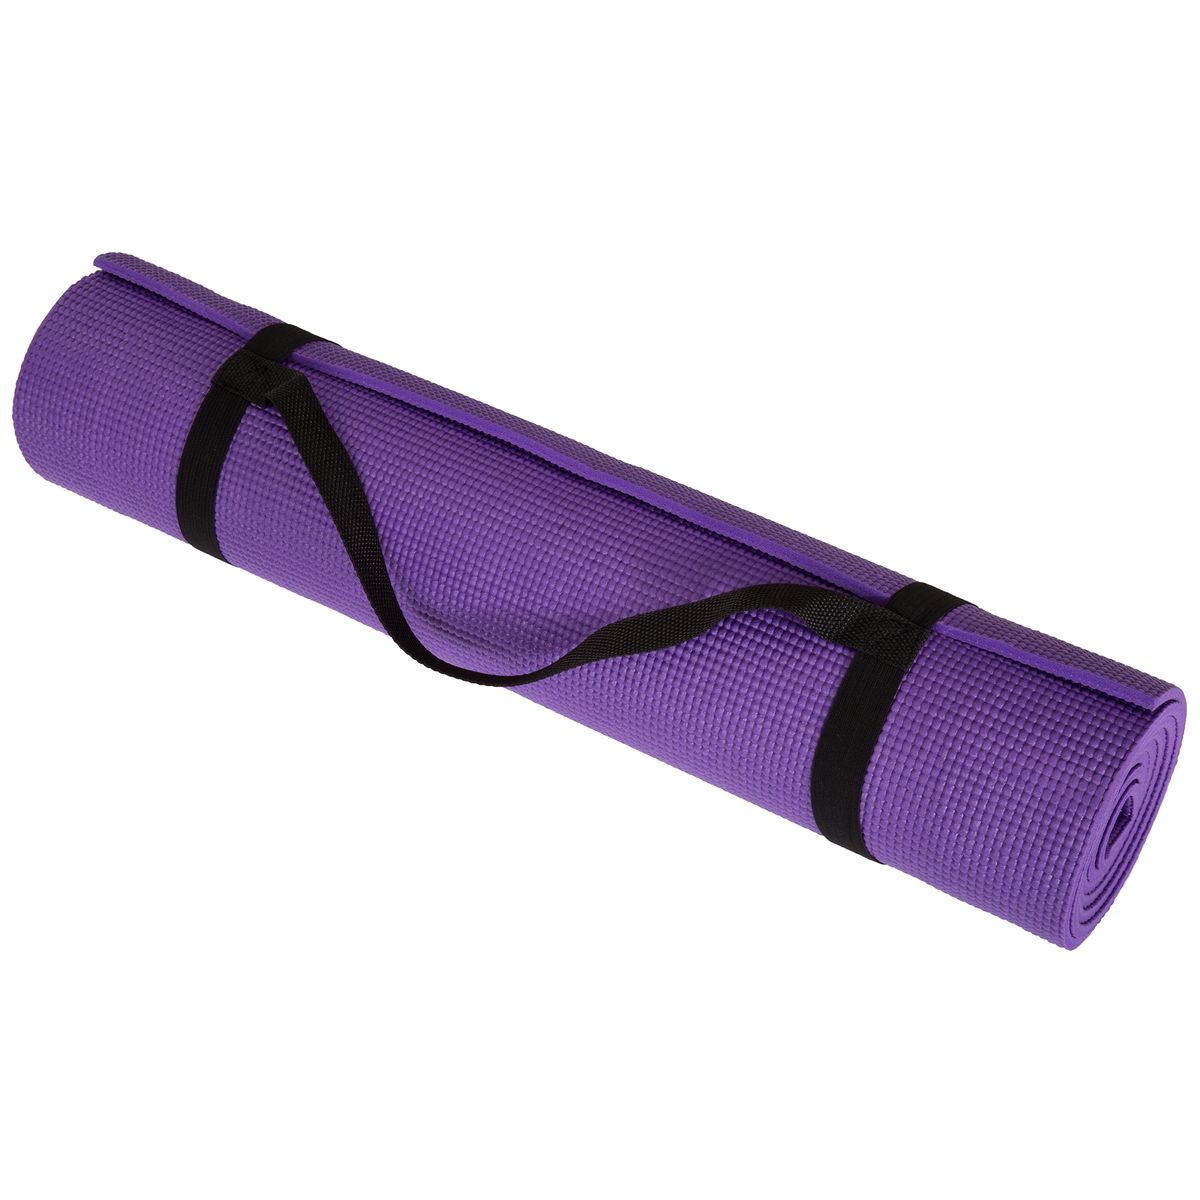 [RDY] [送料無料] Wakeman フィットネス用両面ヨガマット、1/4インチ、パープル [楽天海外通販] | Wakeman Fitness Double Sided Yoga Mat, 1/4 In. Purple